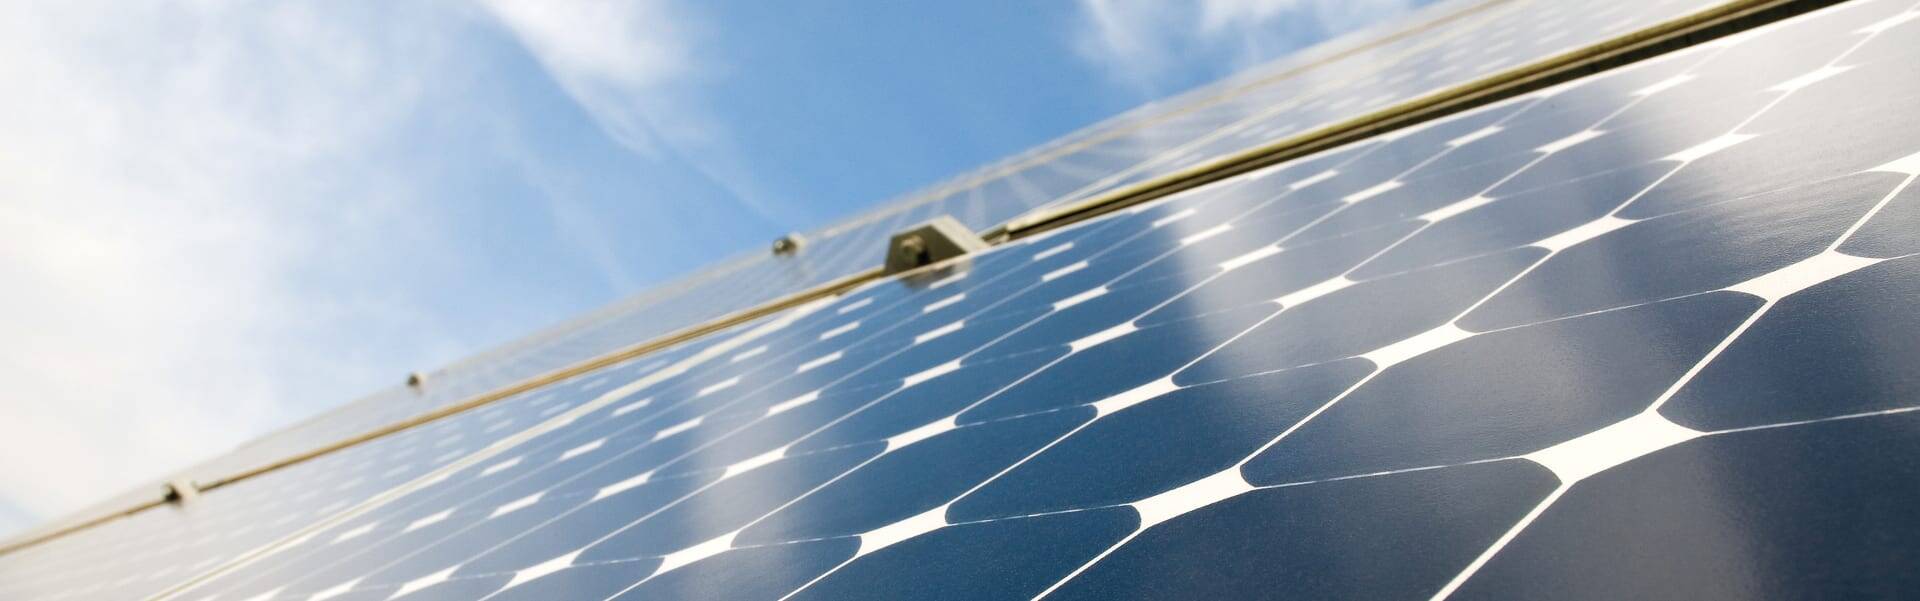 Northumberland Council set to build £3m solar car port